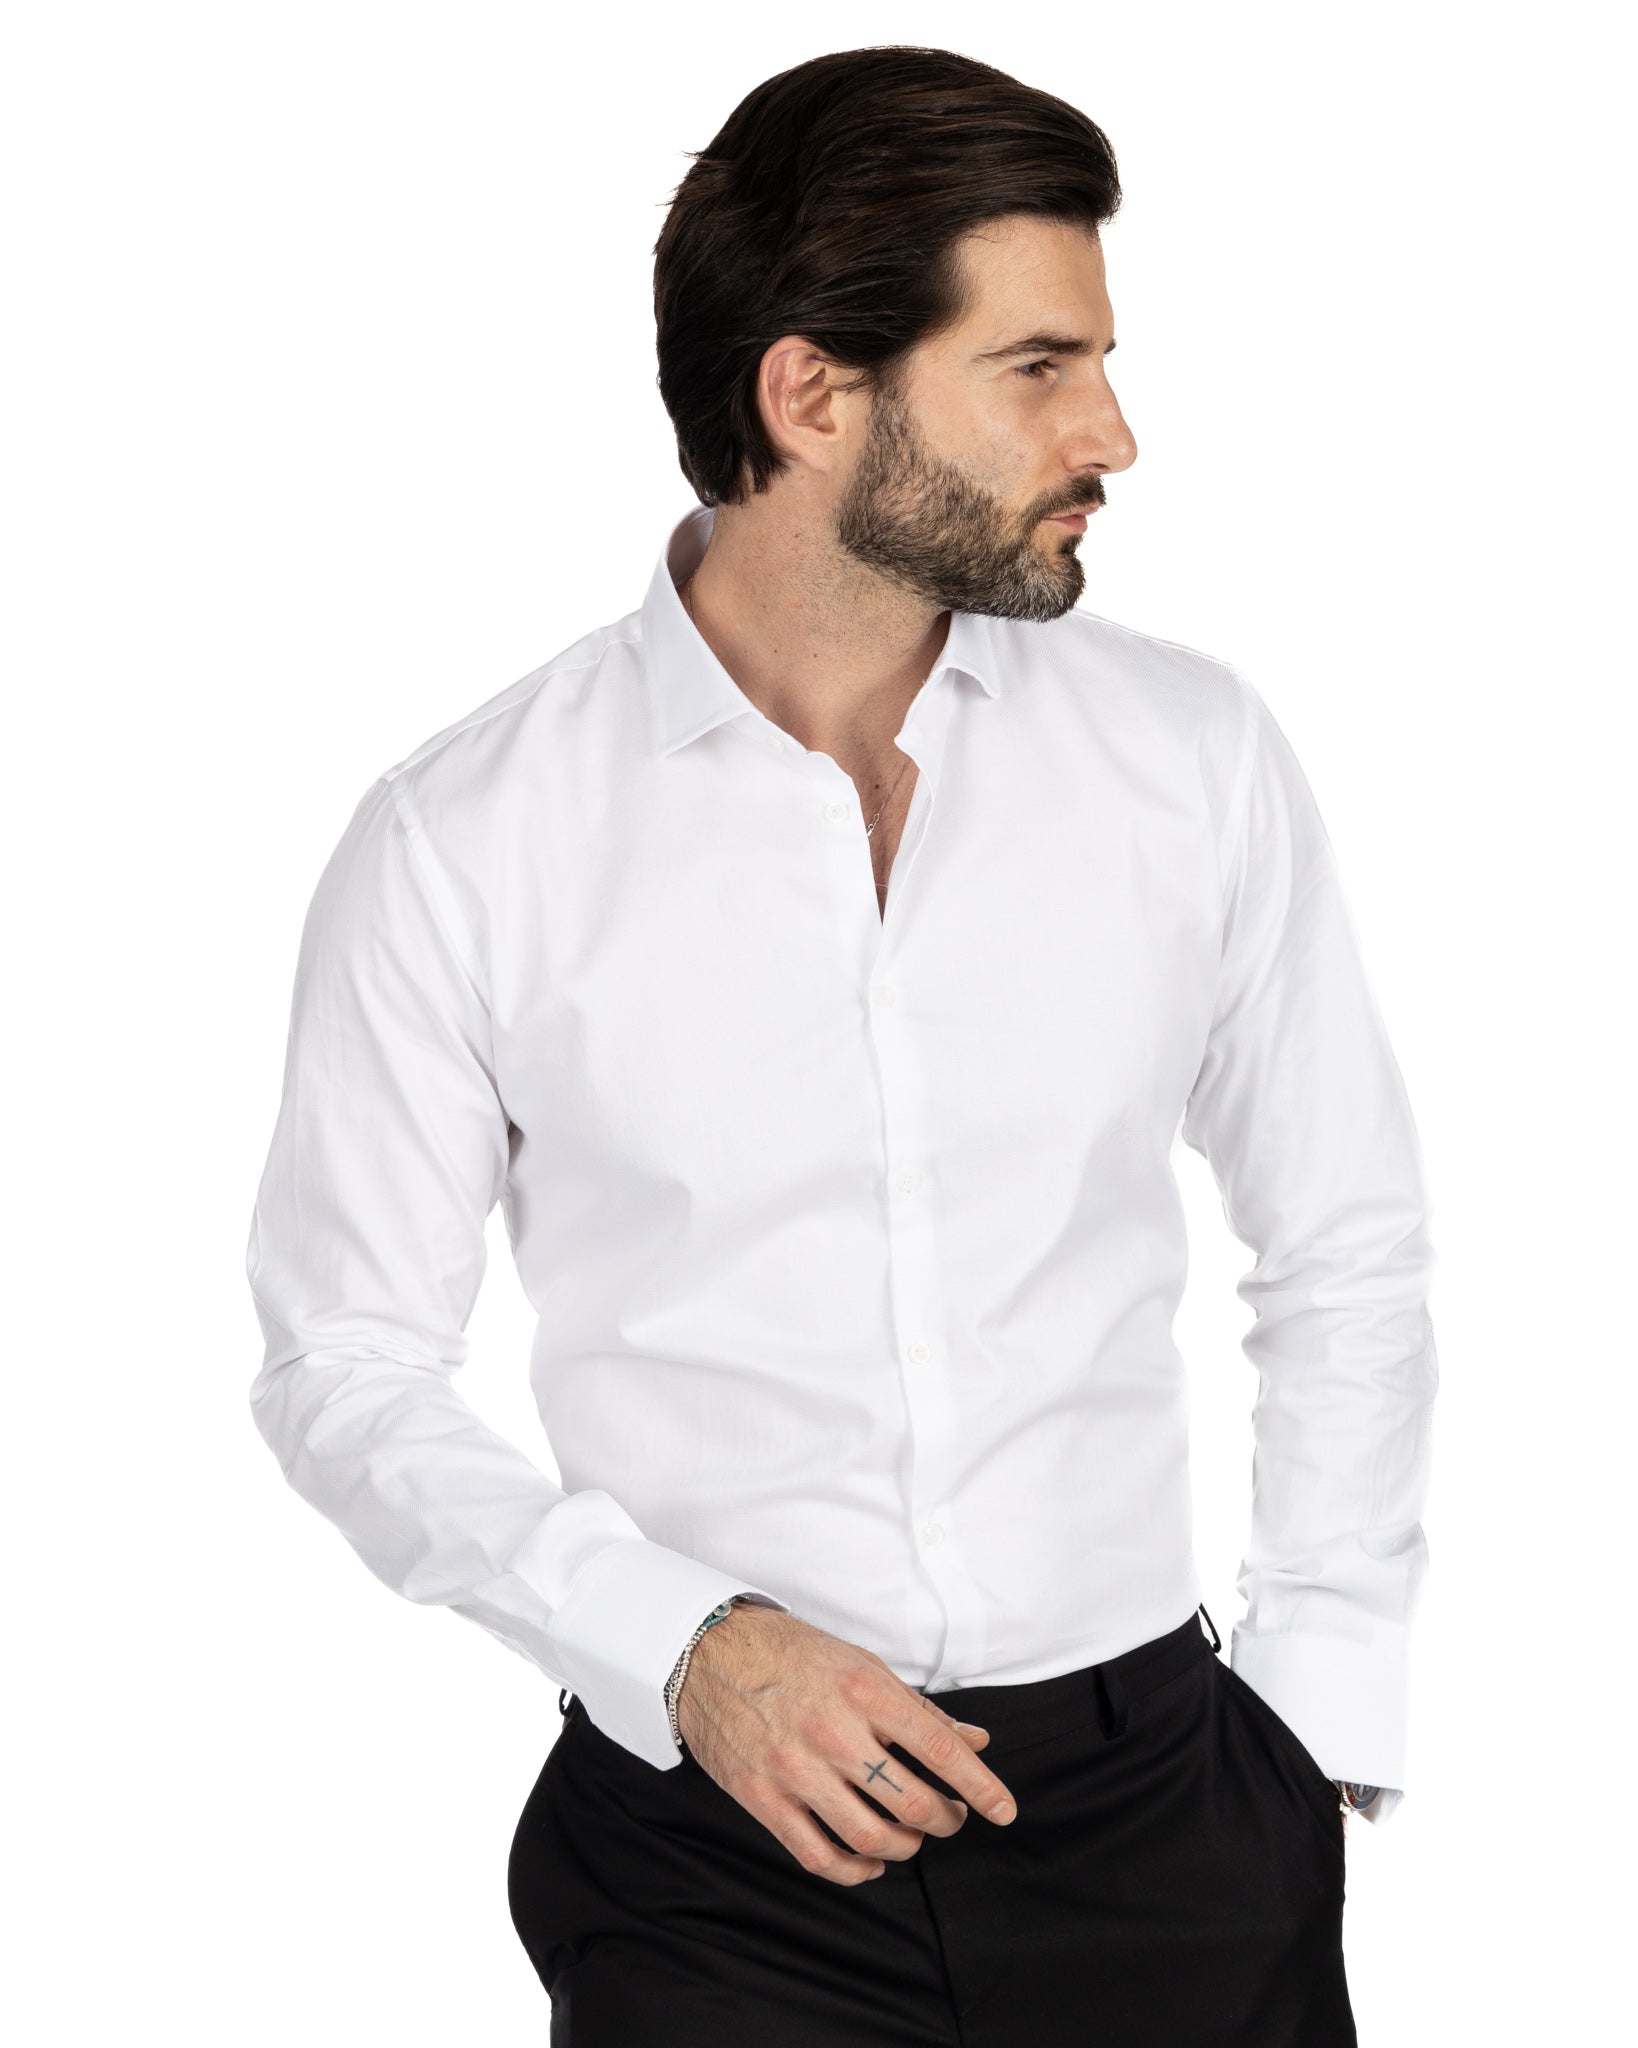 Shirt - slim fit white oxford